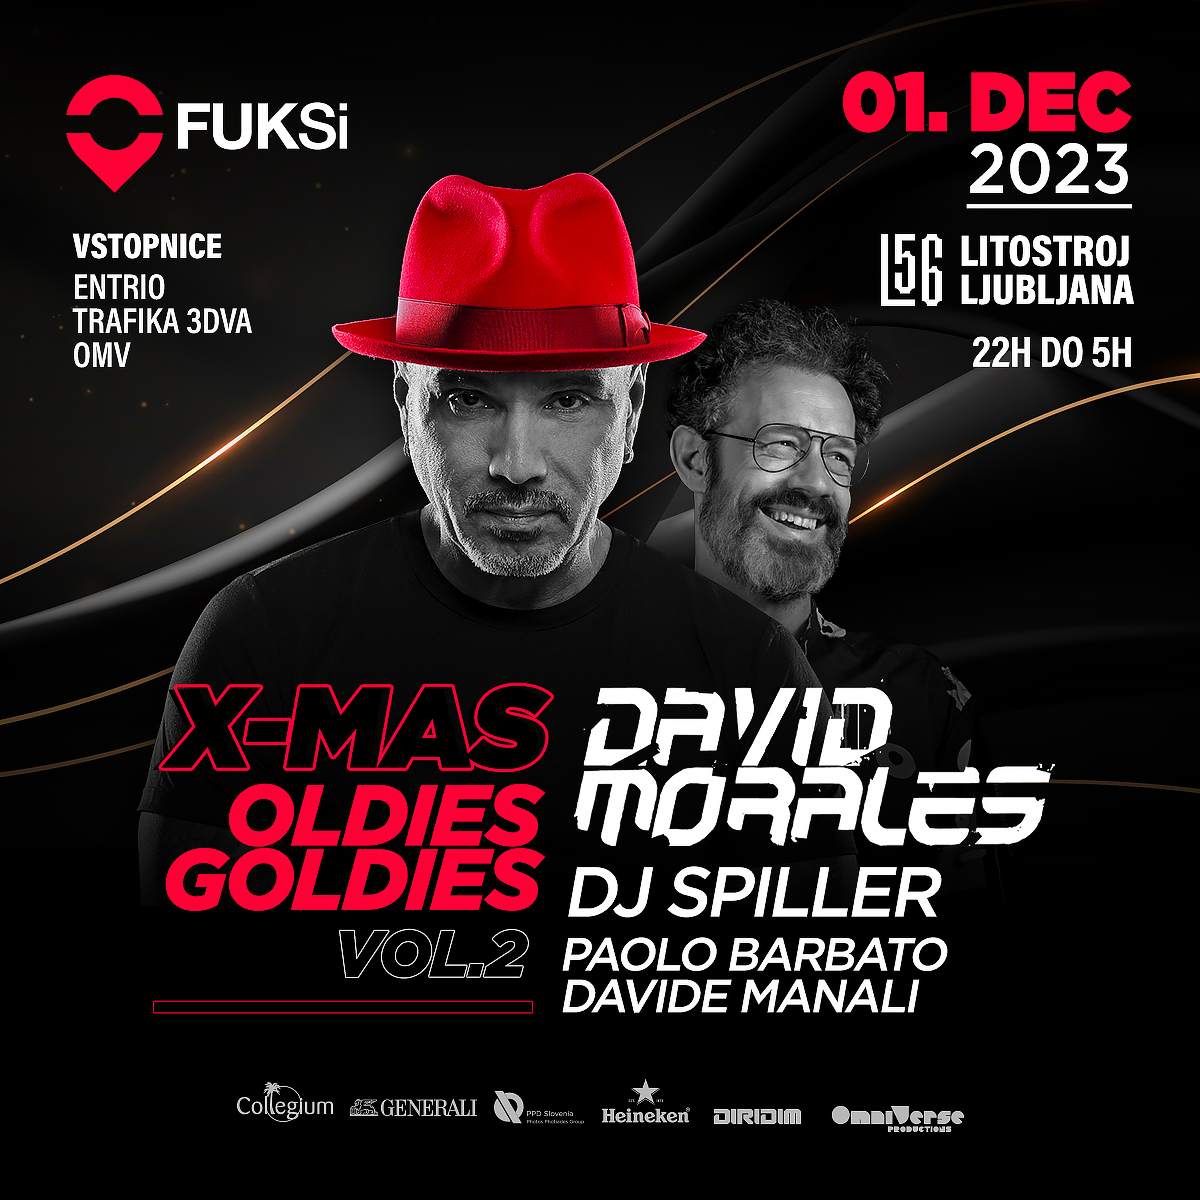 #FUKSi Xmas Oldies Goldies vol. 2 with David Morales & Spiller - Página frontal